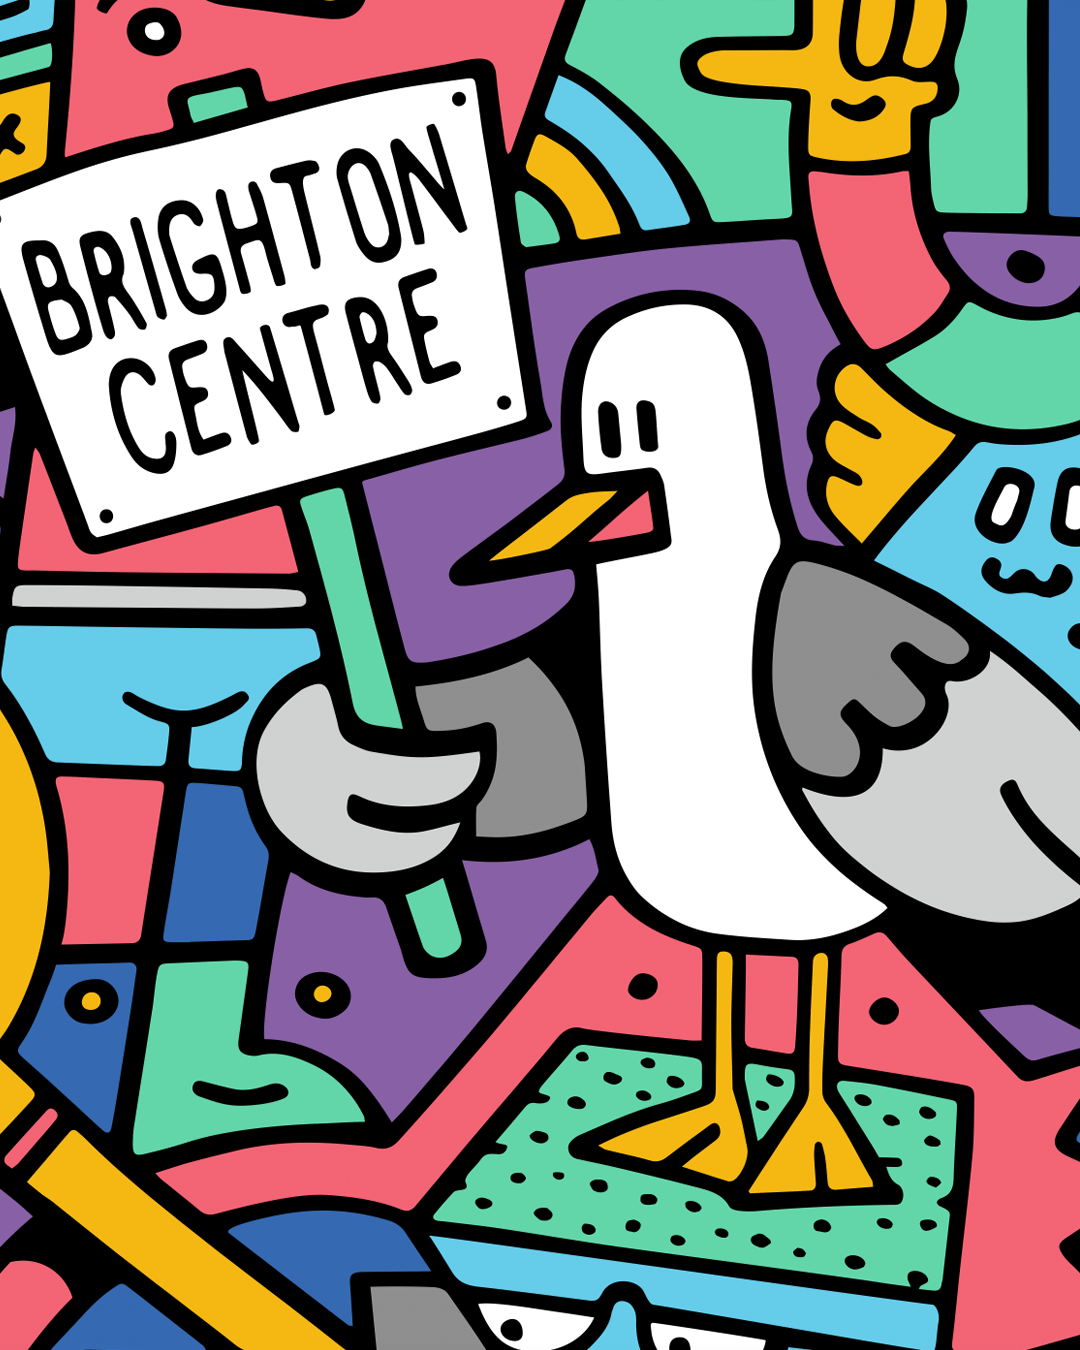 Brighton SEO Conference Poster Print Mister Phil Illustration